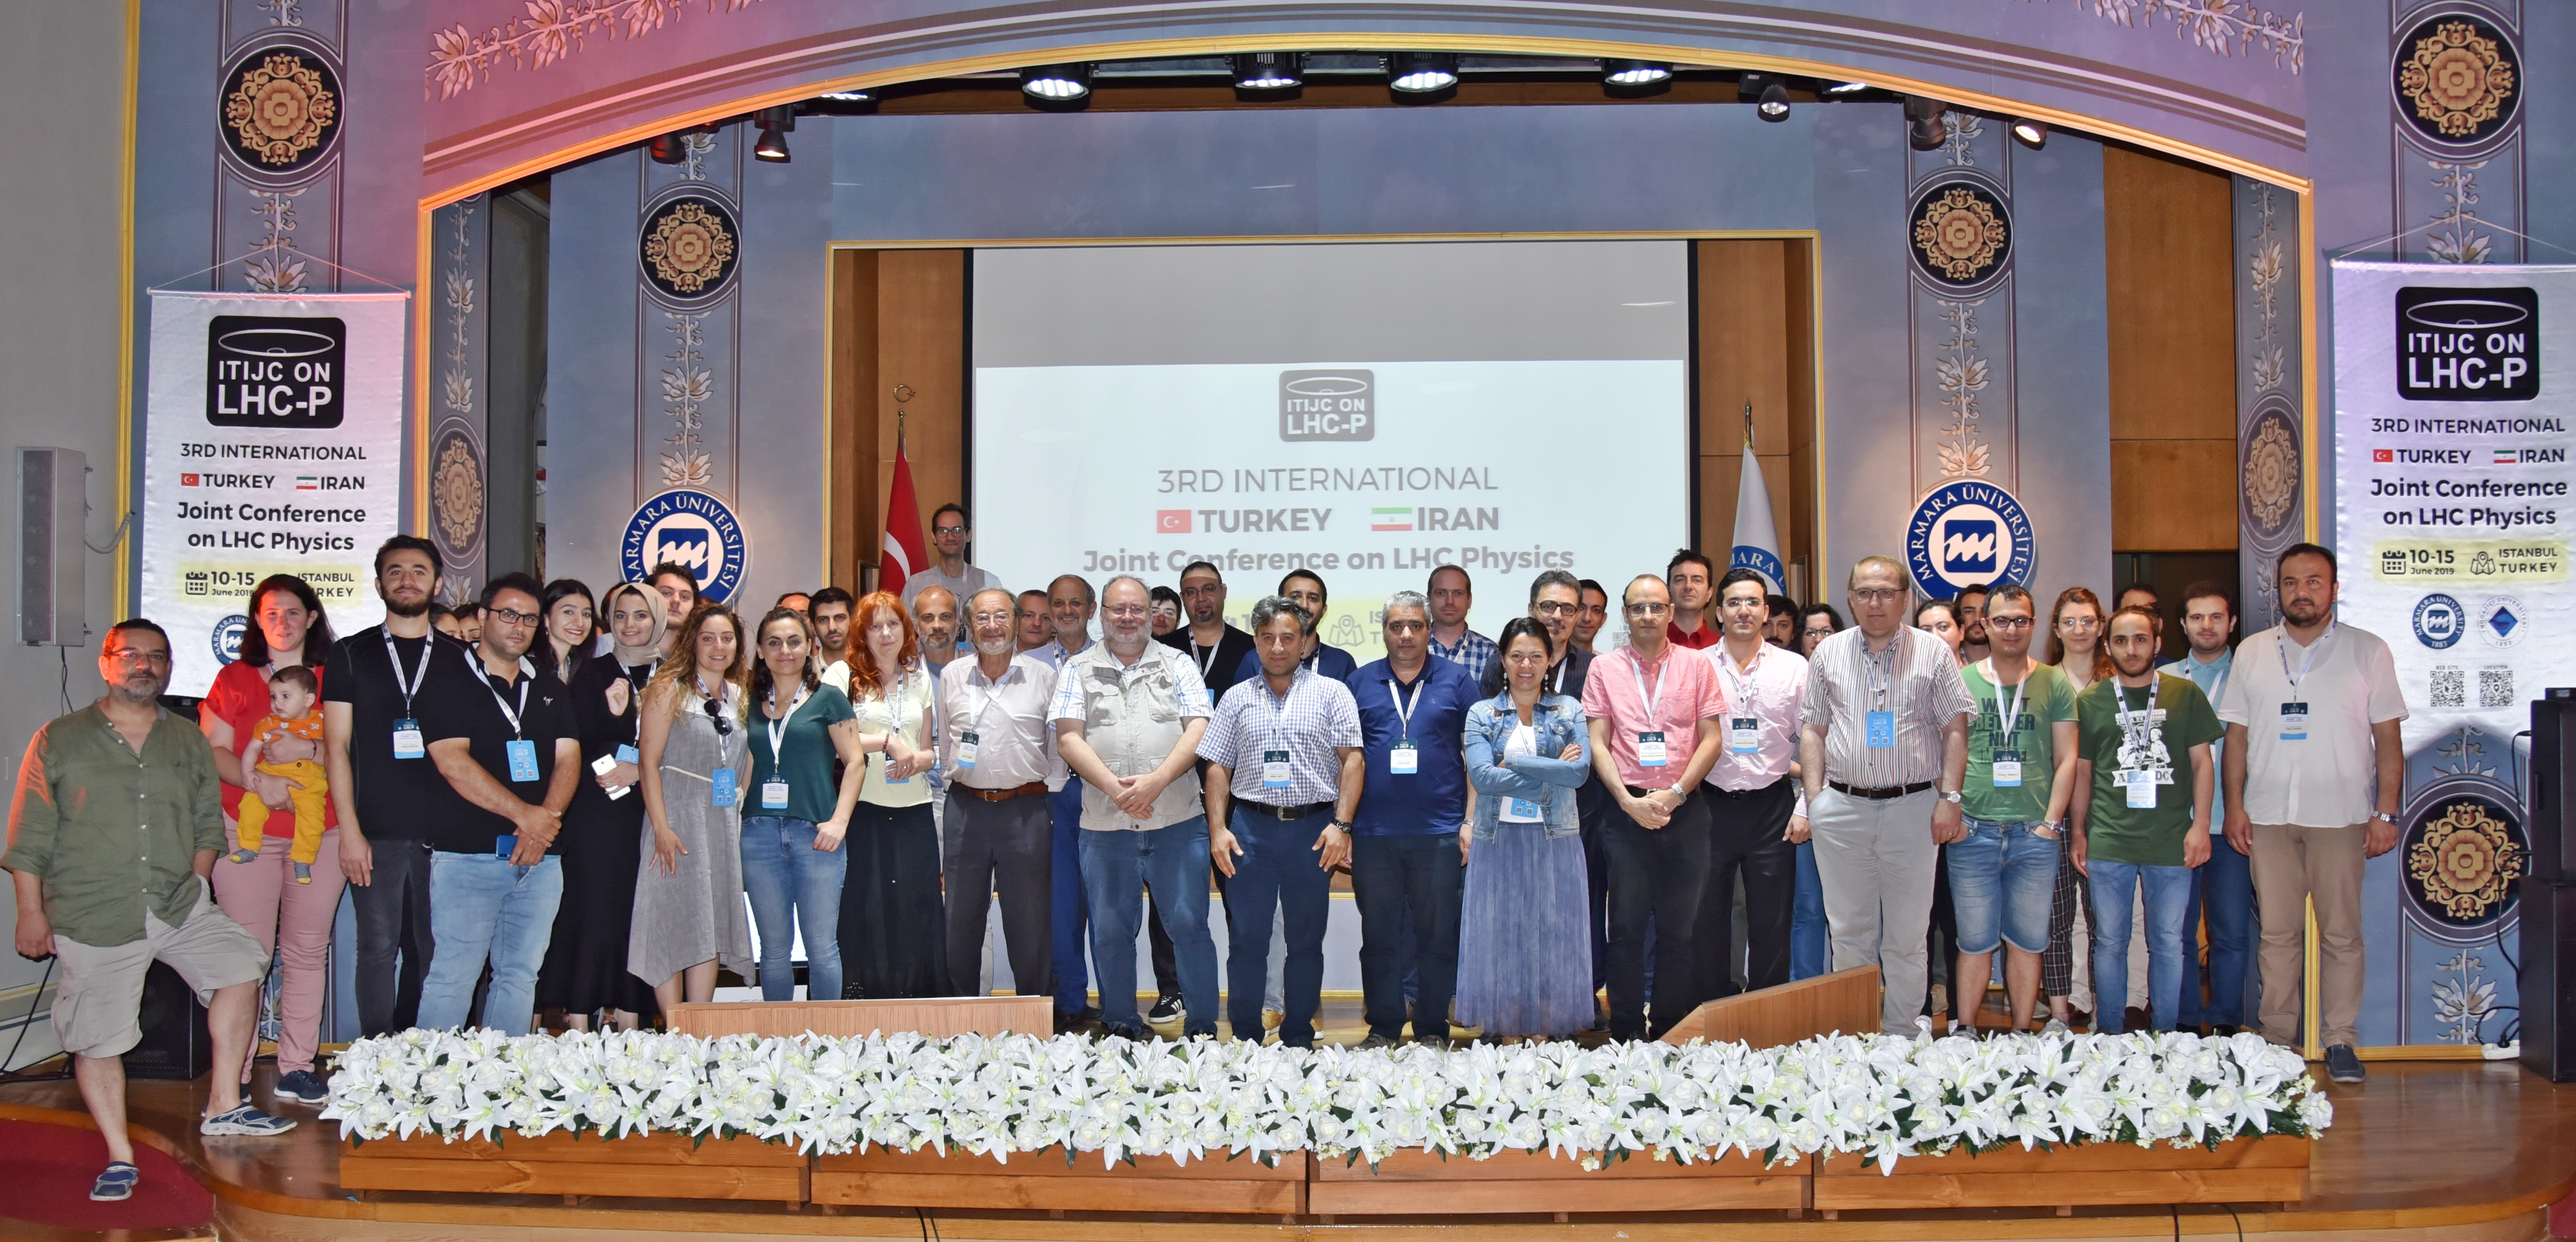 3rd International Turkey Iran Joint Conference on LHC Physics